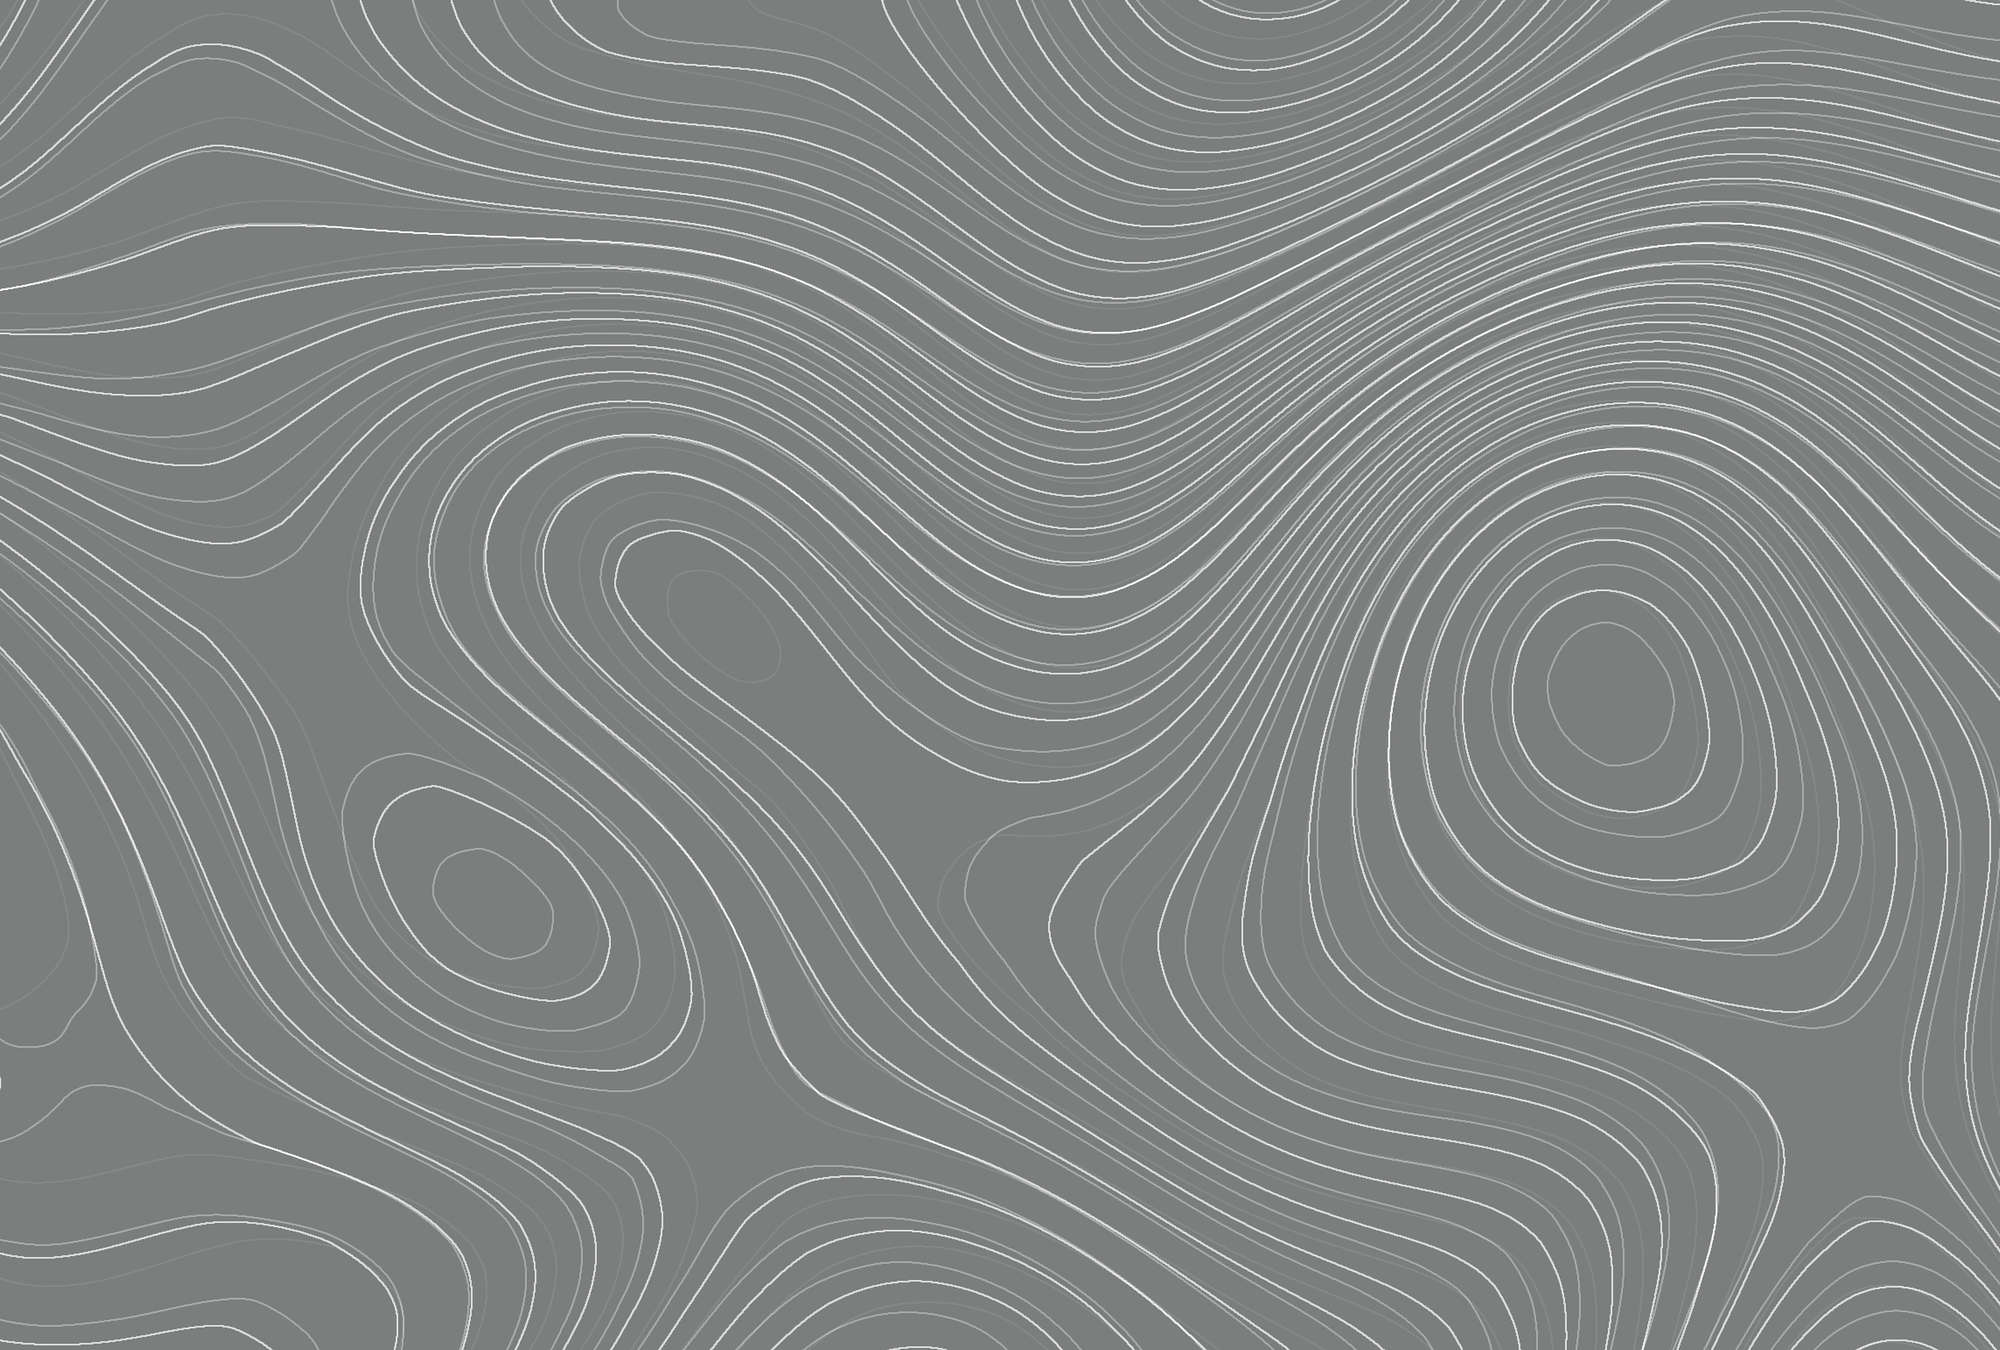             Fototapete abstraktes Linien-Muster – Walls by Patel
        